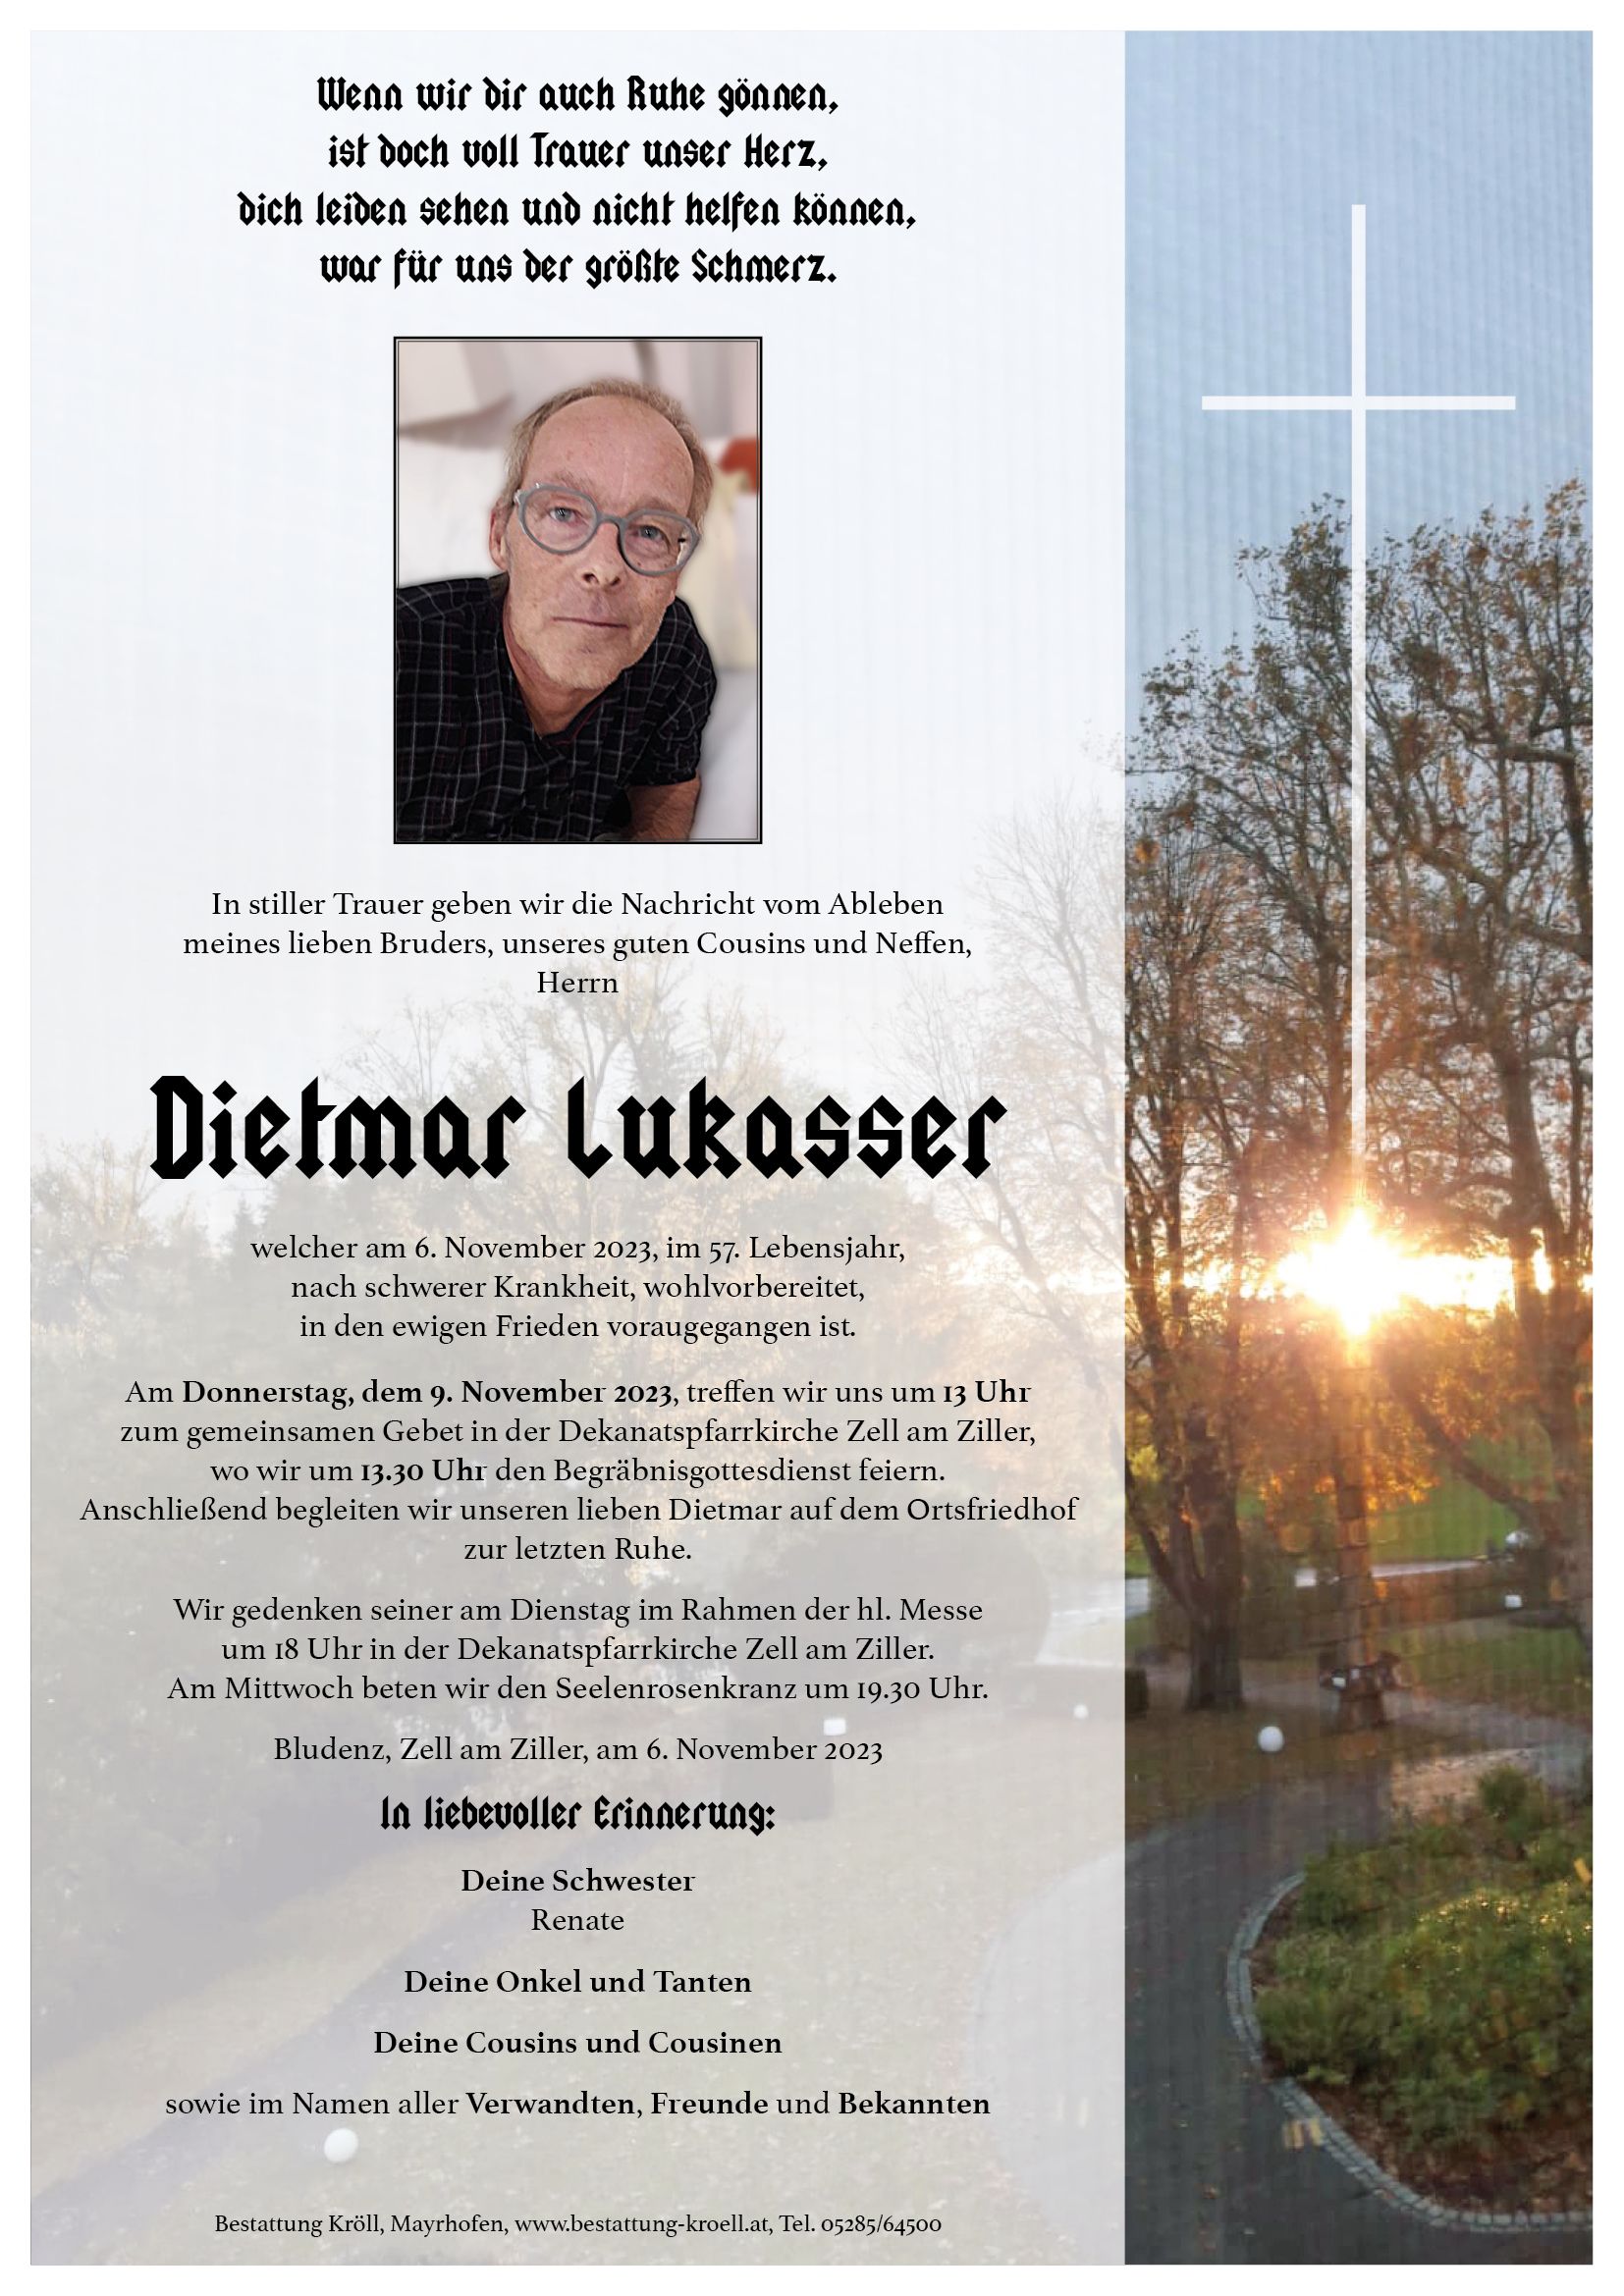 Dietmar Lukasser